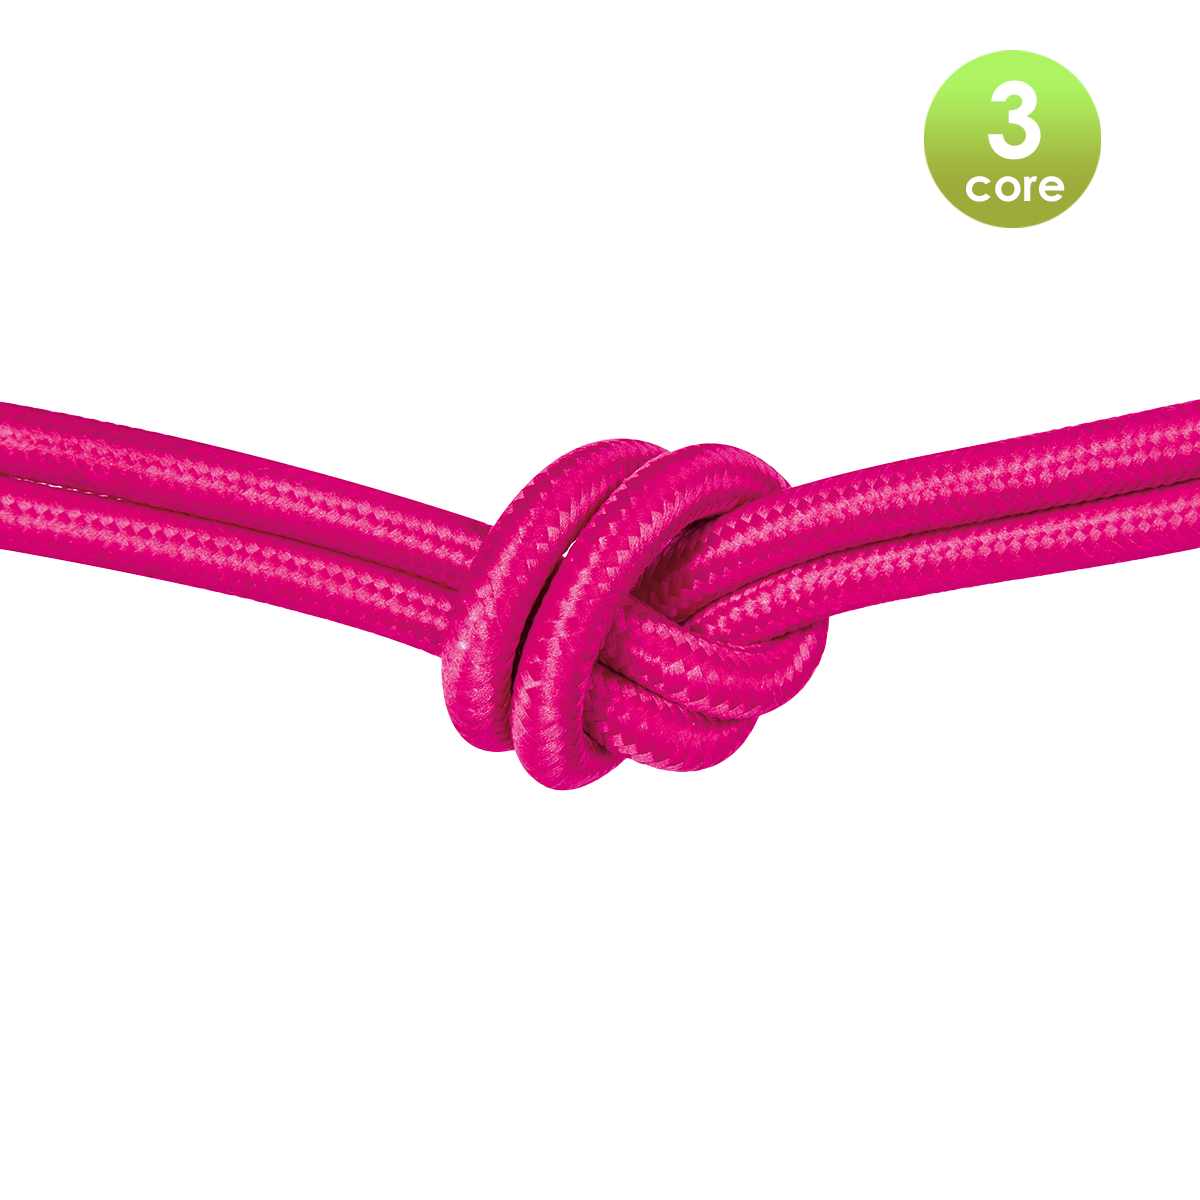 Tangla lighting - TLCB01006RD - 3c - Fabric cable 3 core - in deep pink